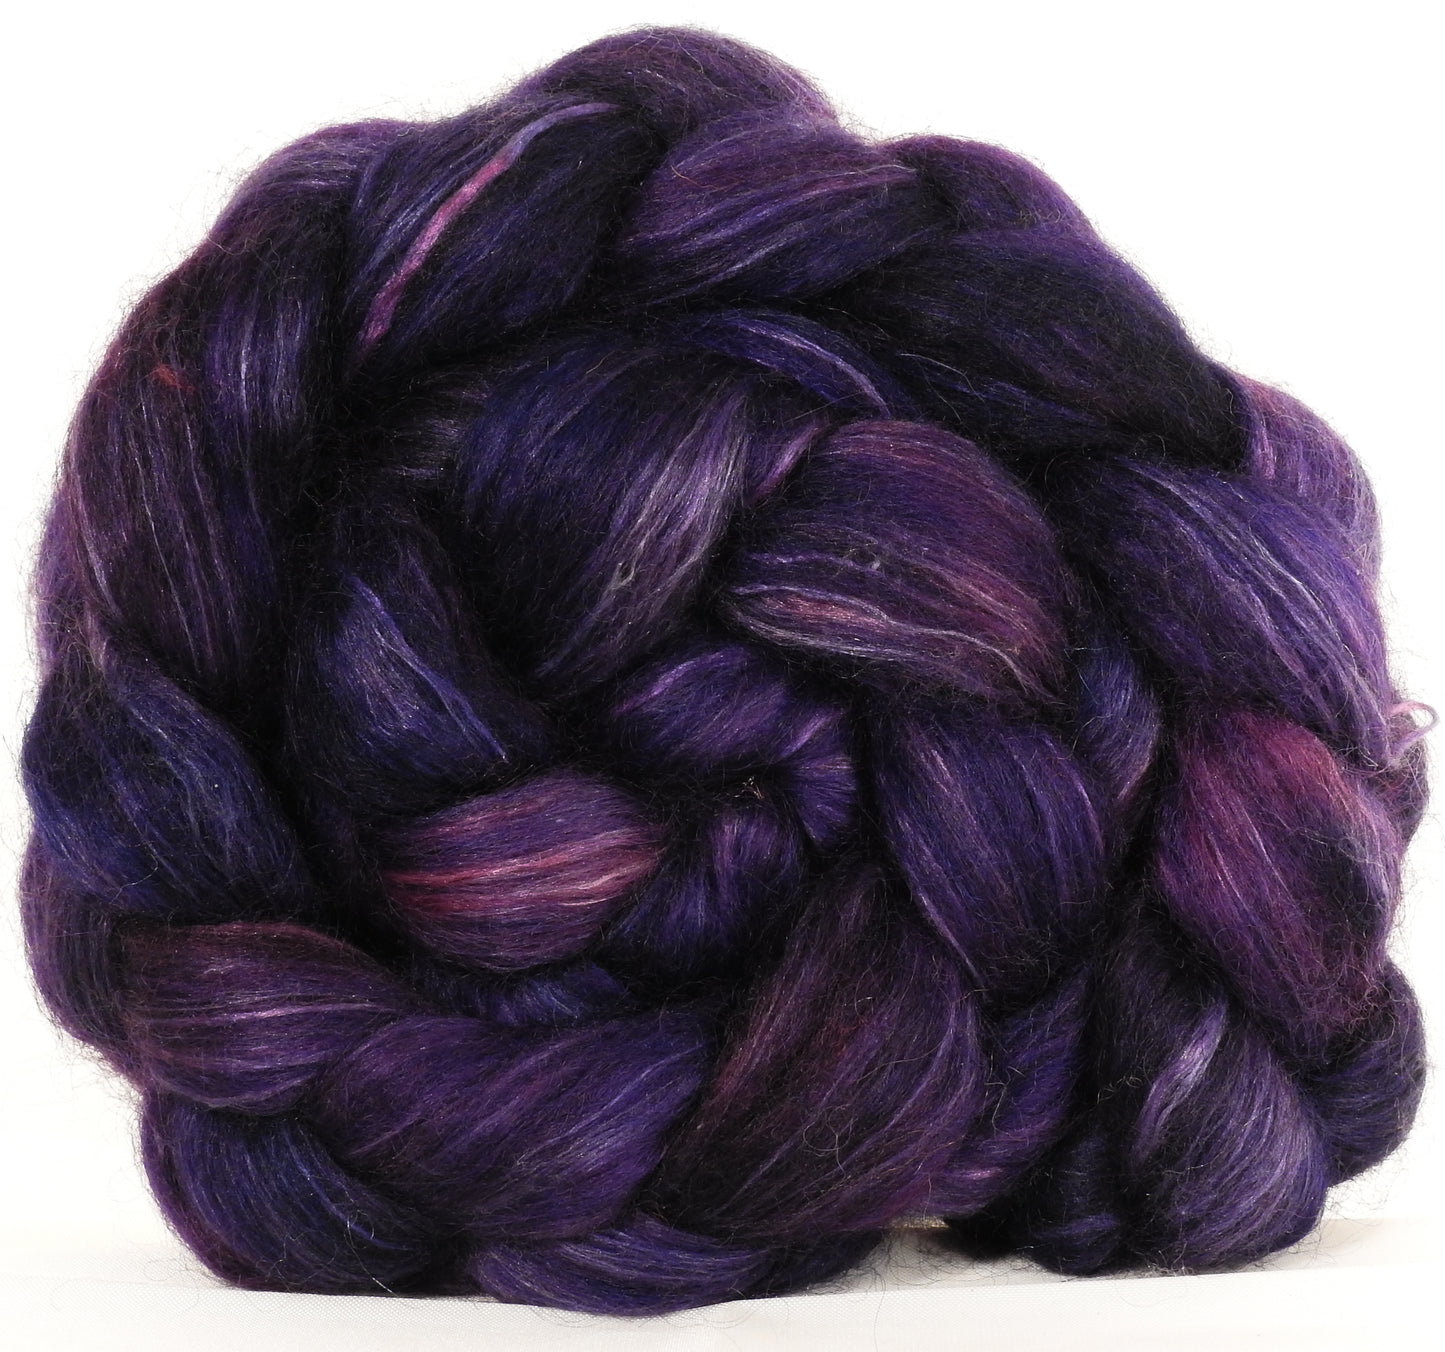 Wensleydale/ mulberry silk roving ( 65/35) - Damson Plum - (5.3 oz.) - Inglenook Fibers